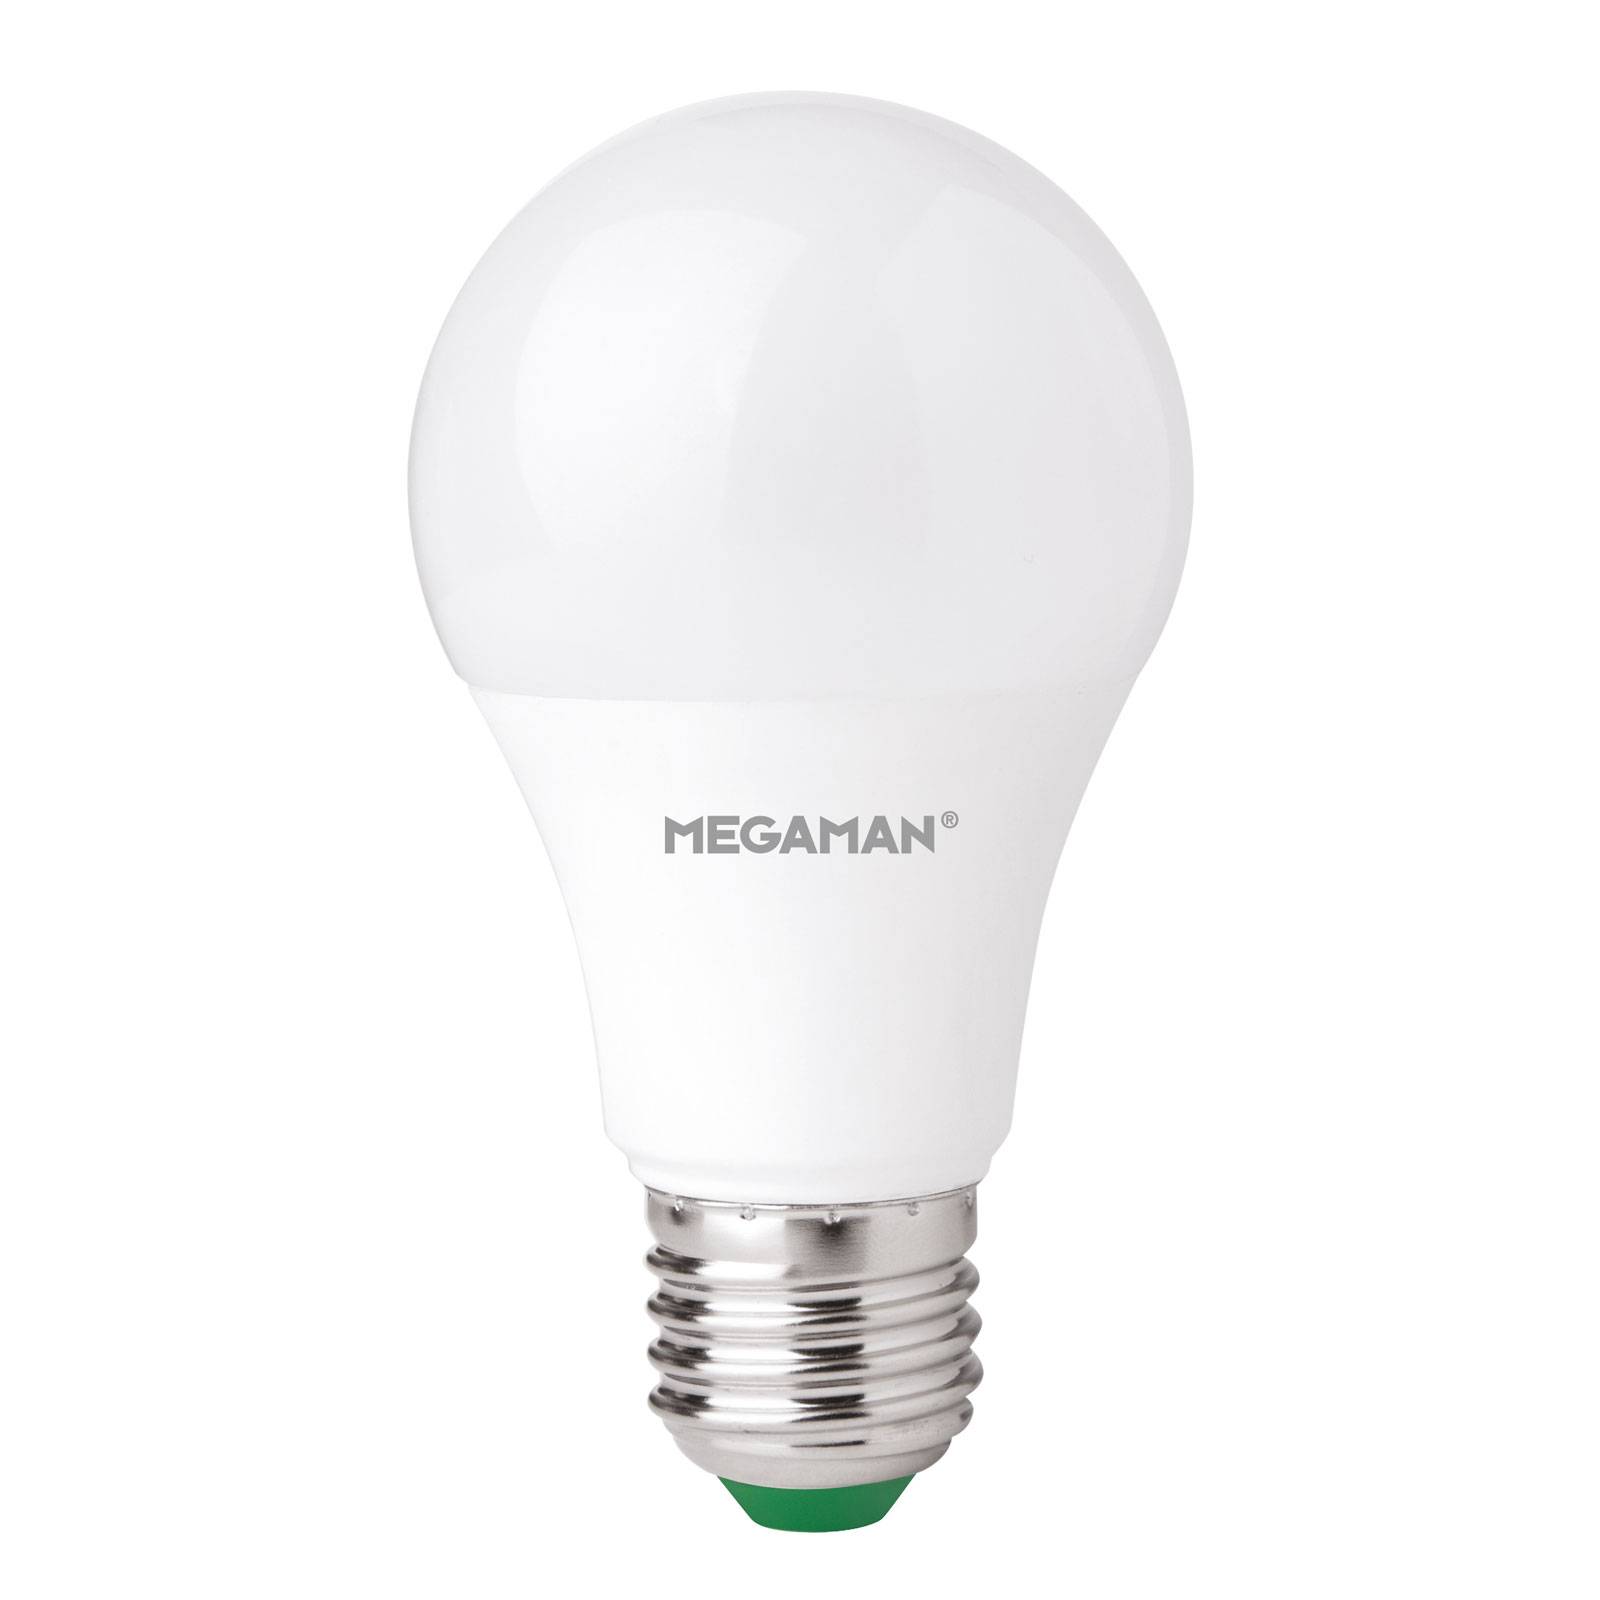 Megaman LED-Lampe E27 A60 9W, warmweiß, dimmbar